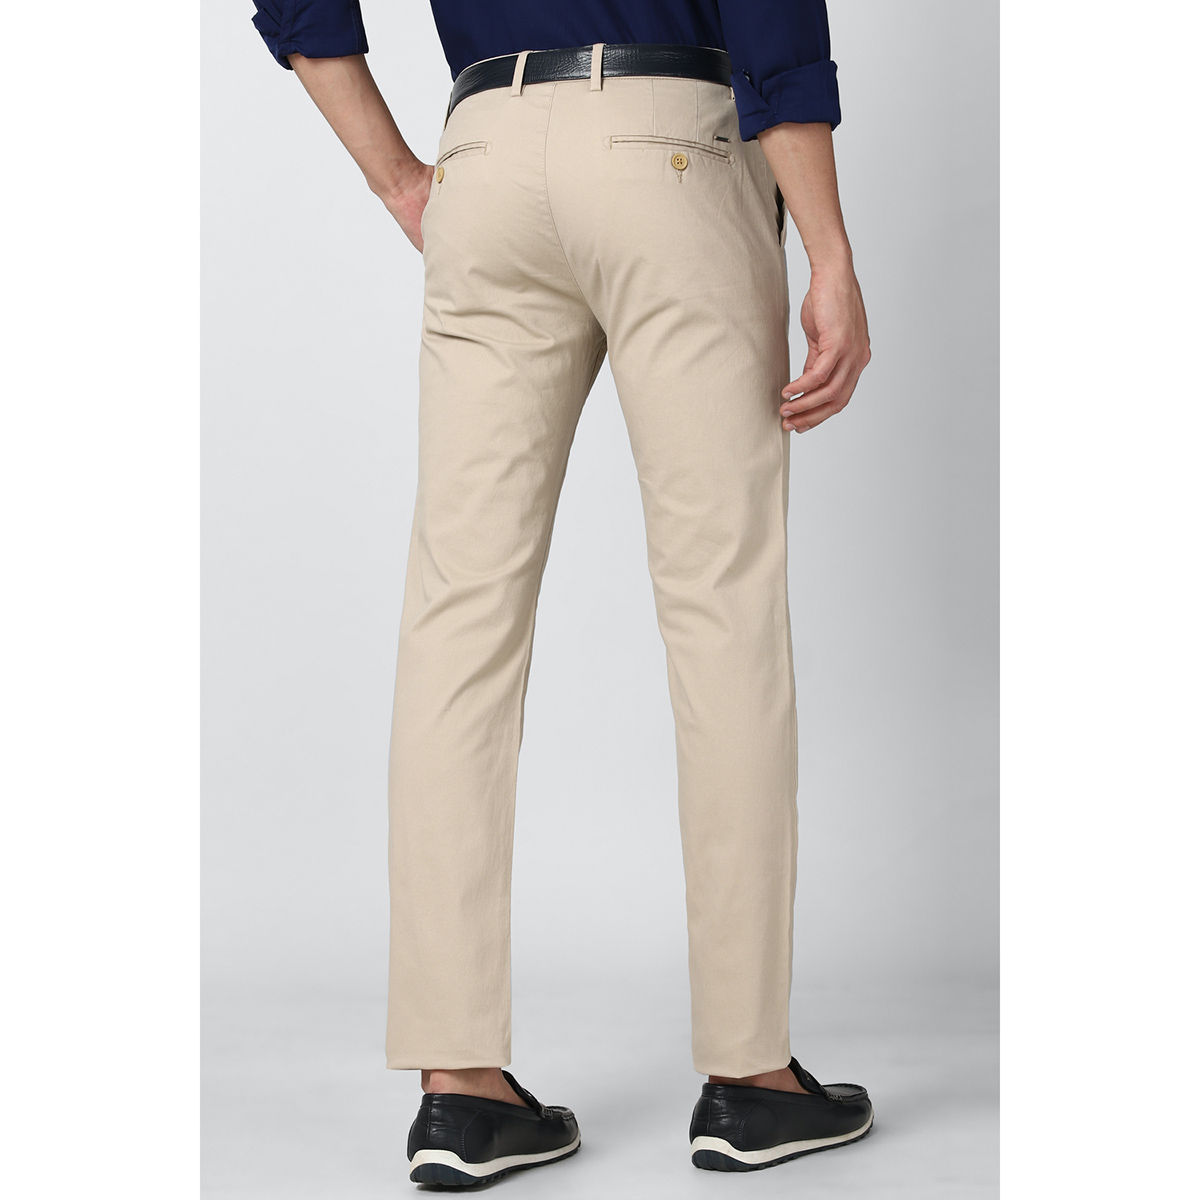 Buy Men Brown Solid Regular Fit Casual Trousers Online - 193968 | Peter  England